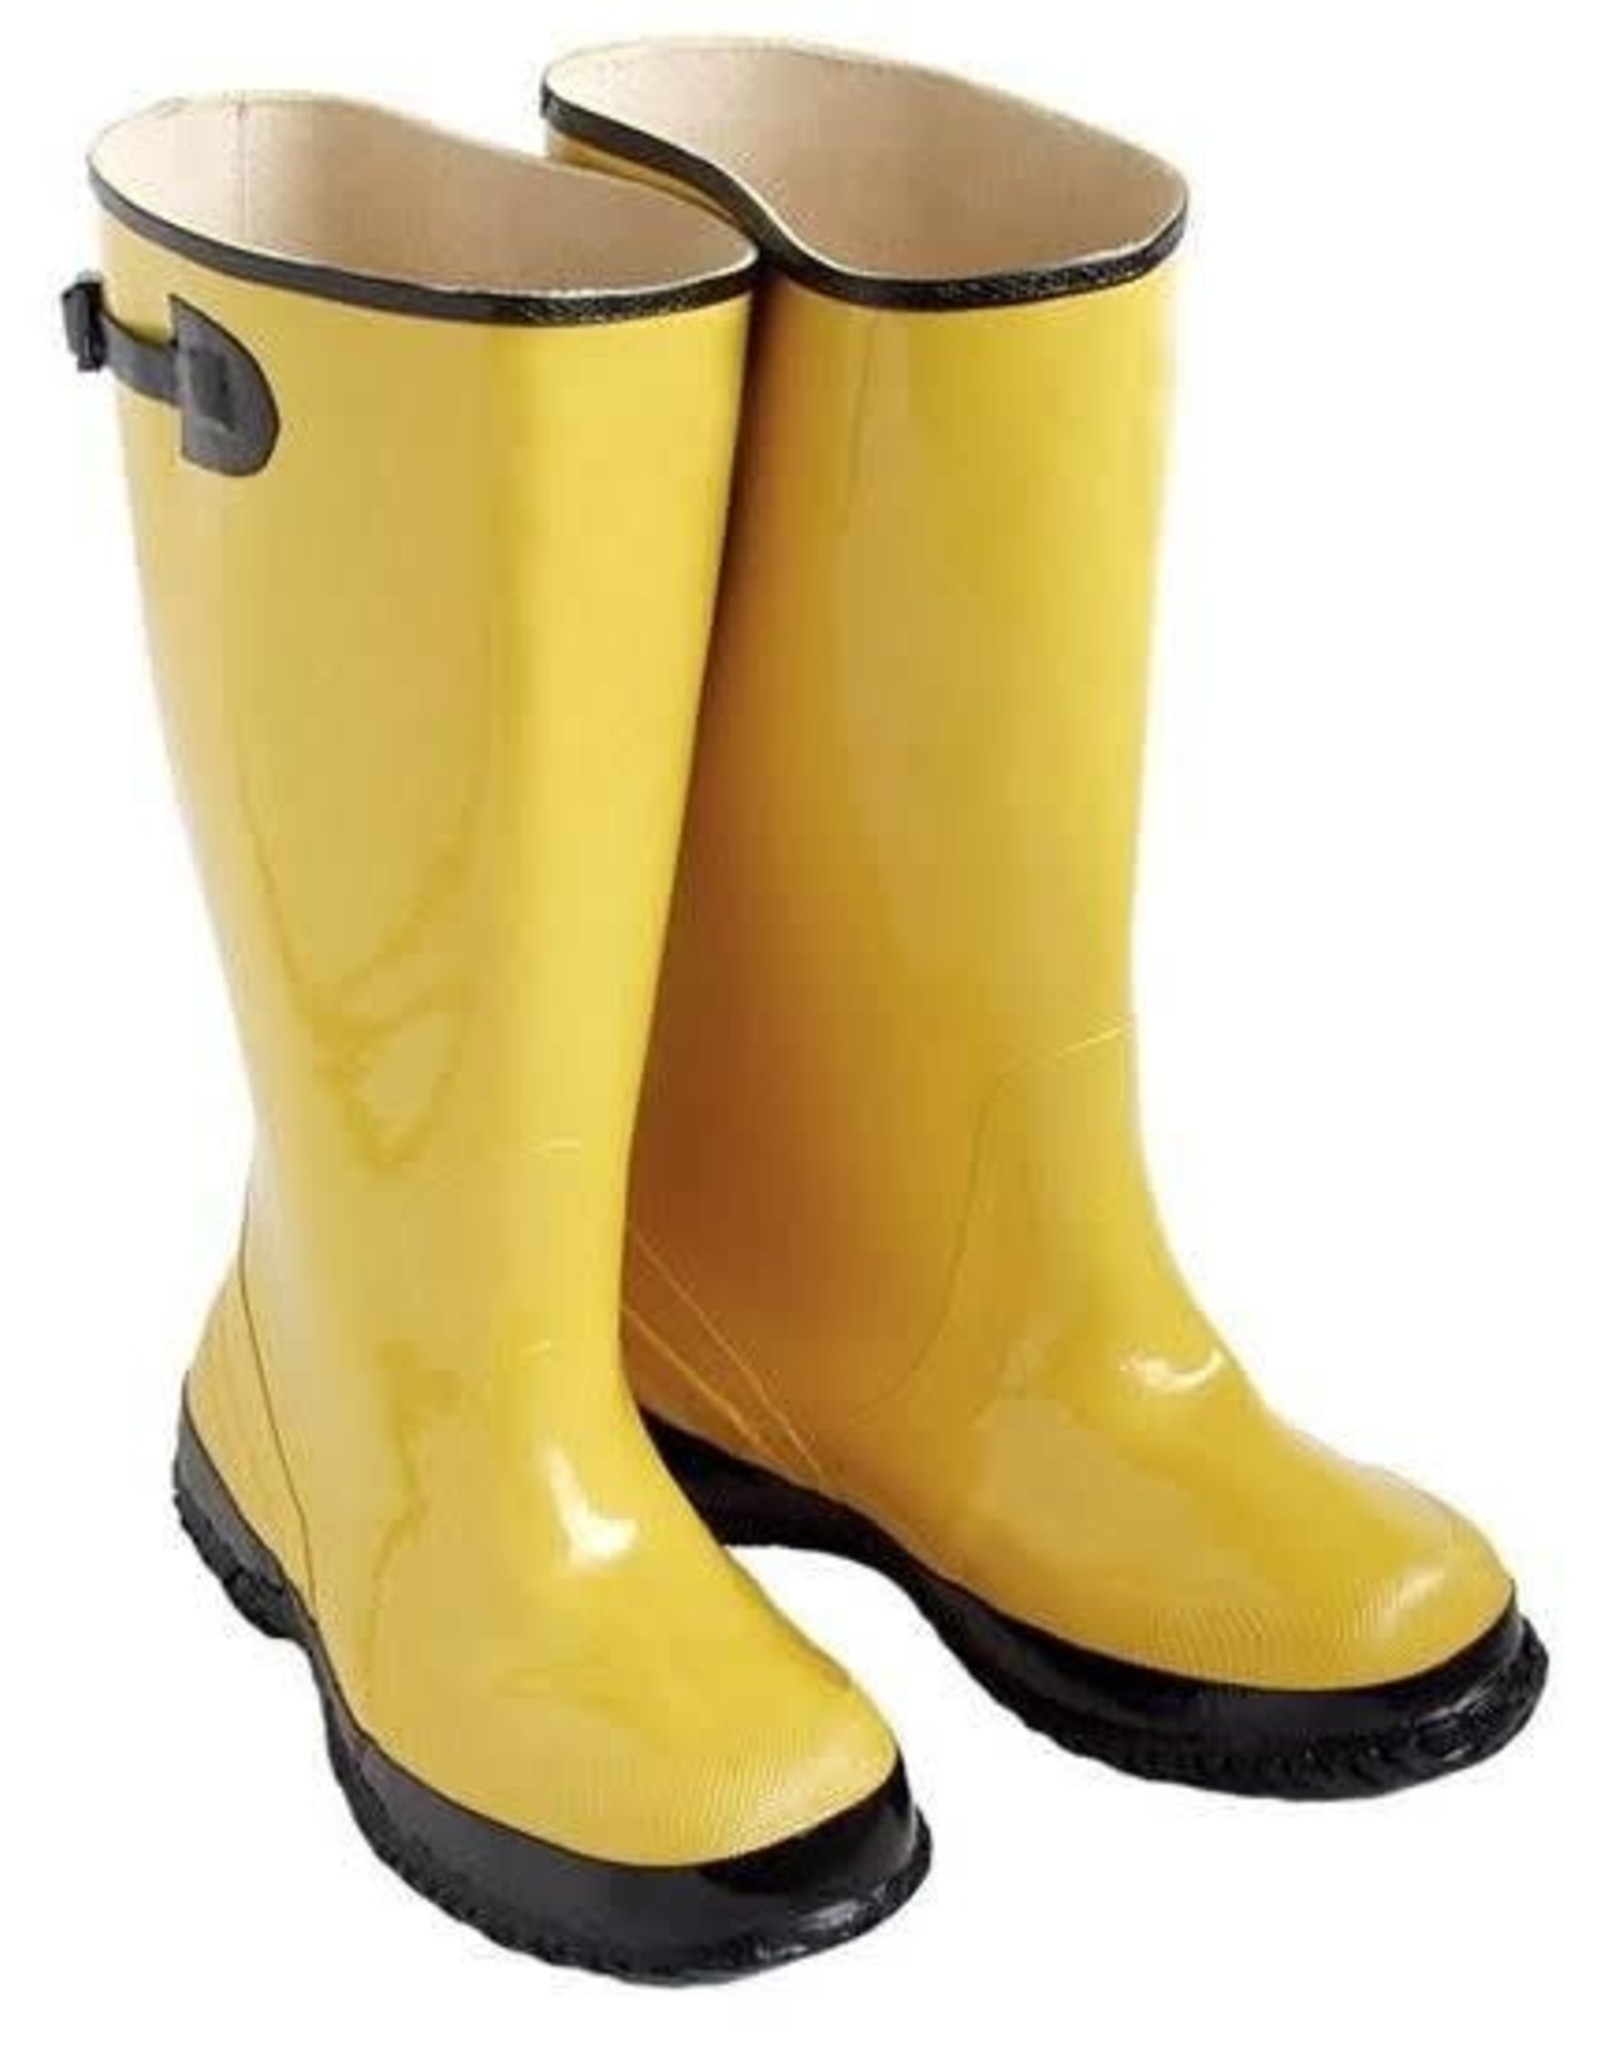 Boots, Yellow w/Fabric Lining, SZ. 11